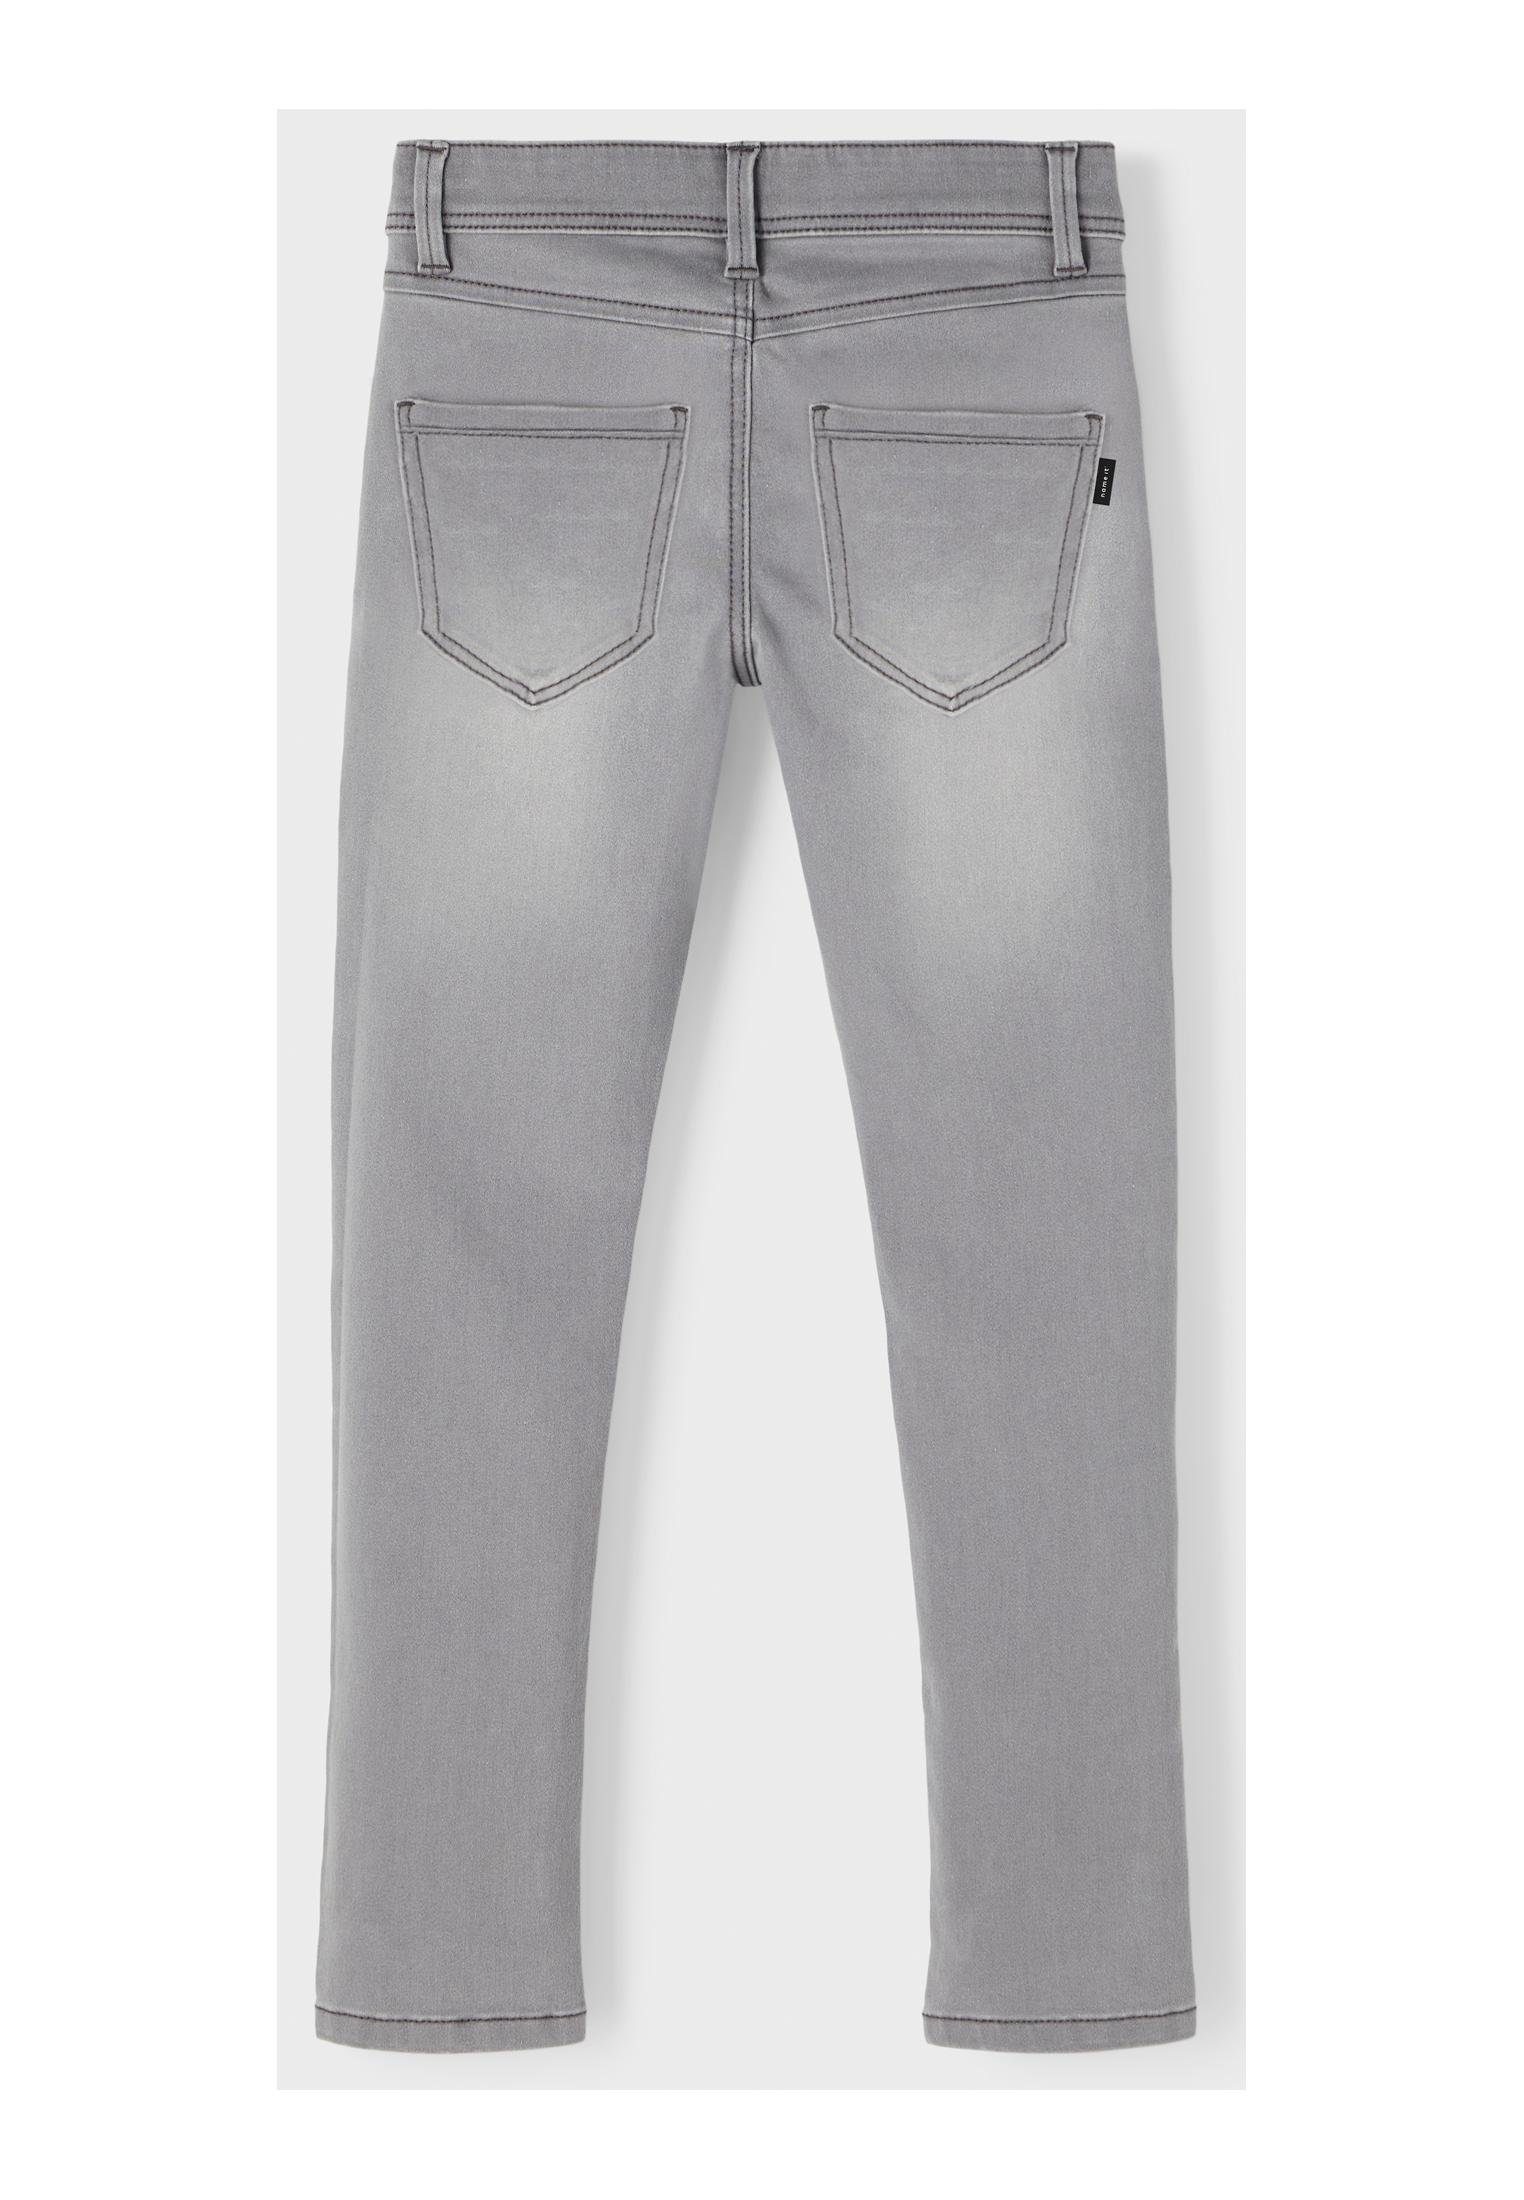 NKMSILAS grey JEANS 2002-TX It Skinny-fit-Jeans medium Name XSLIM denim